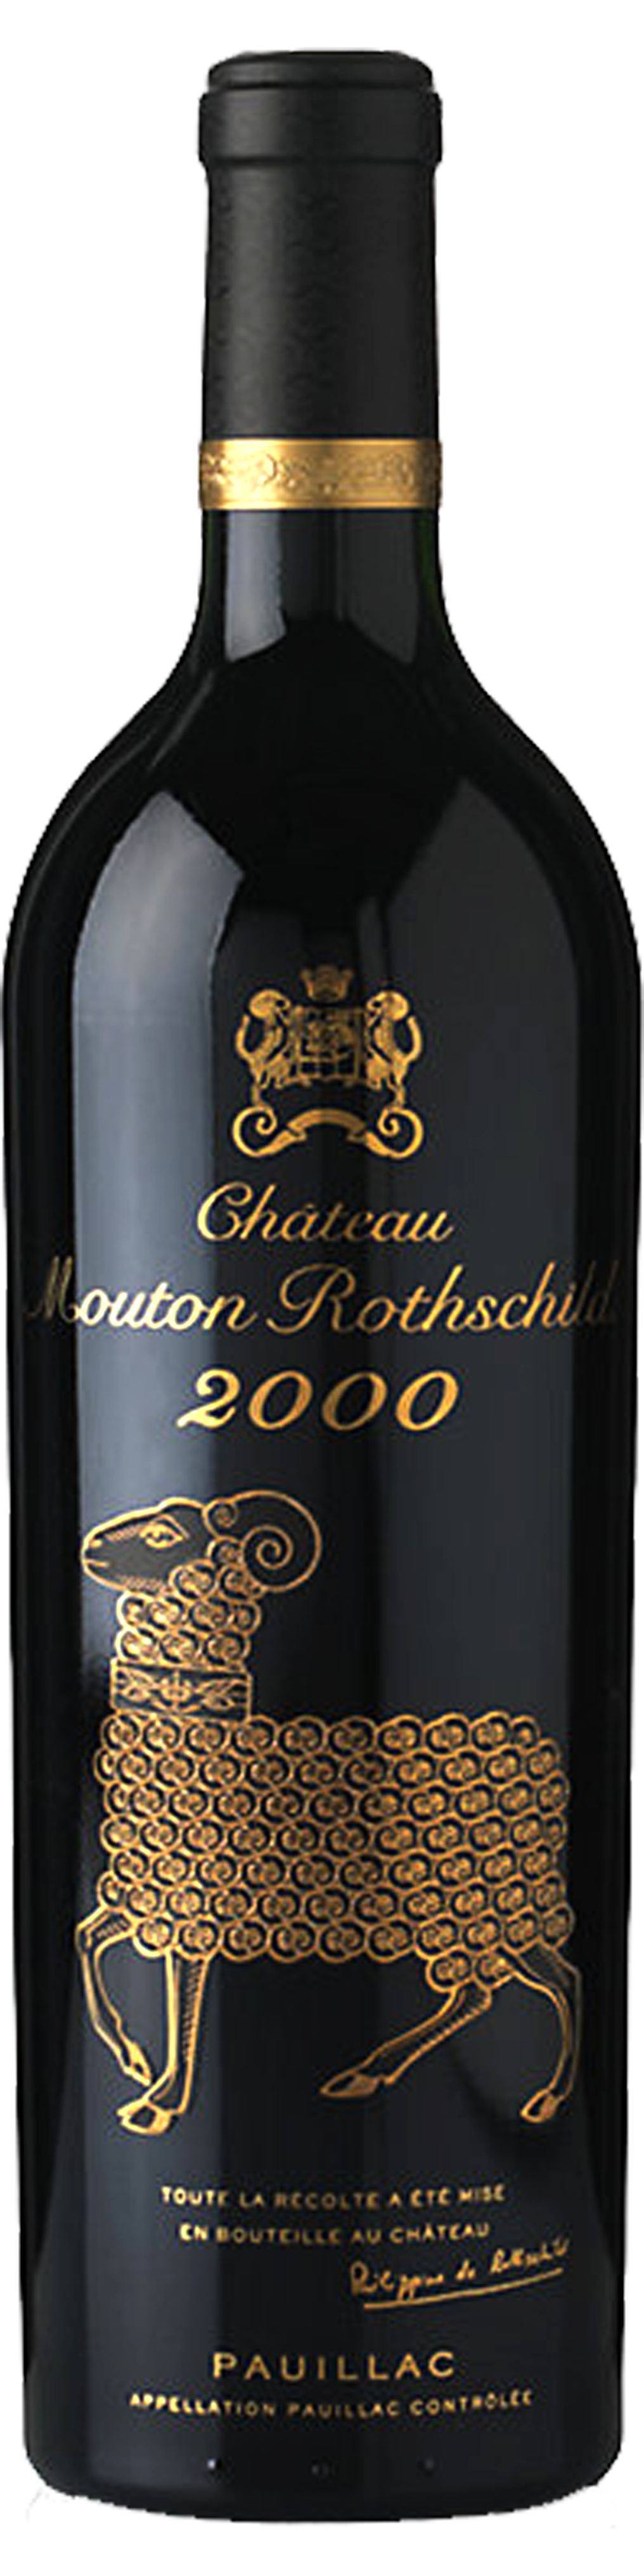 Château Mouton-Rothschild 2000